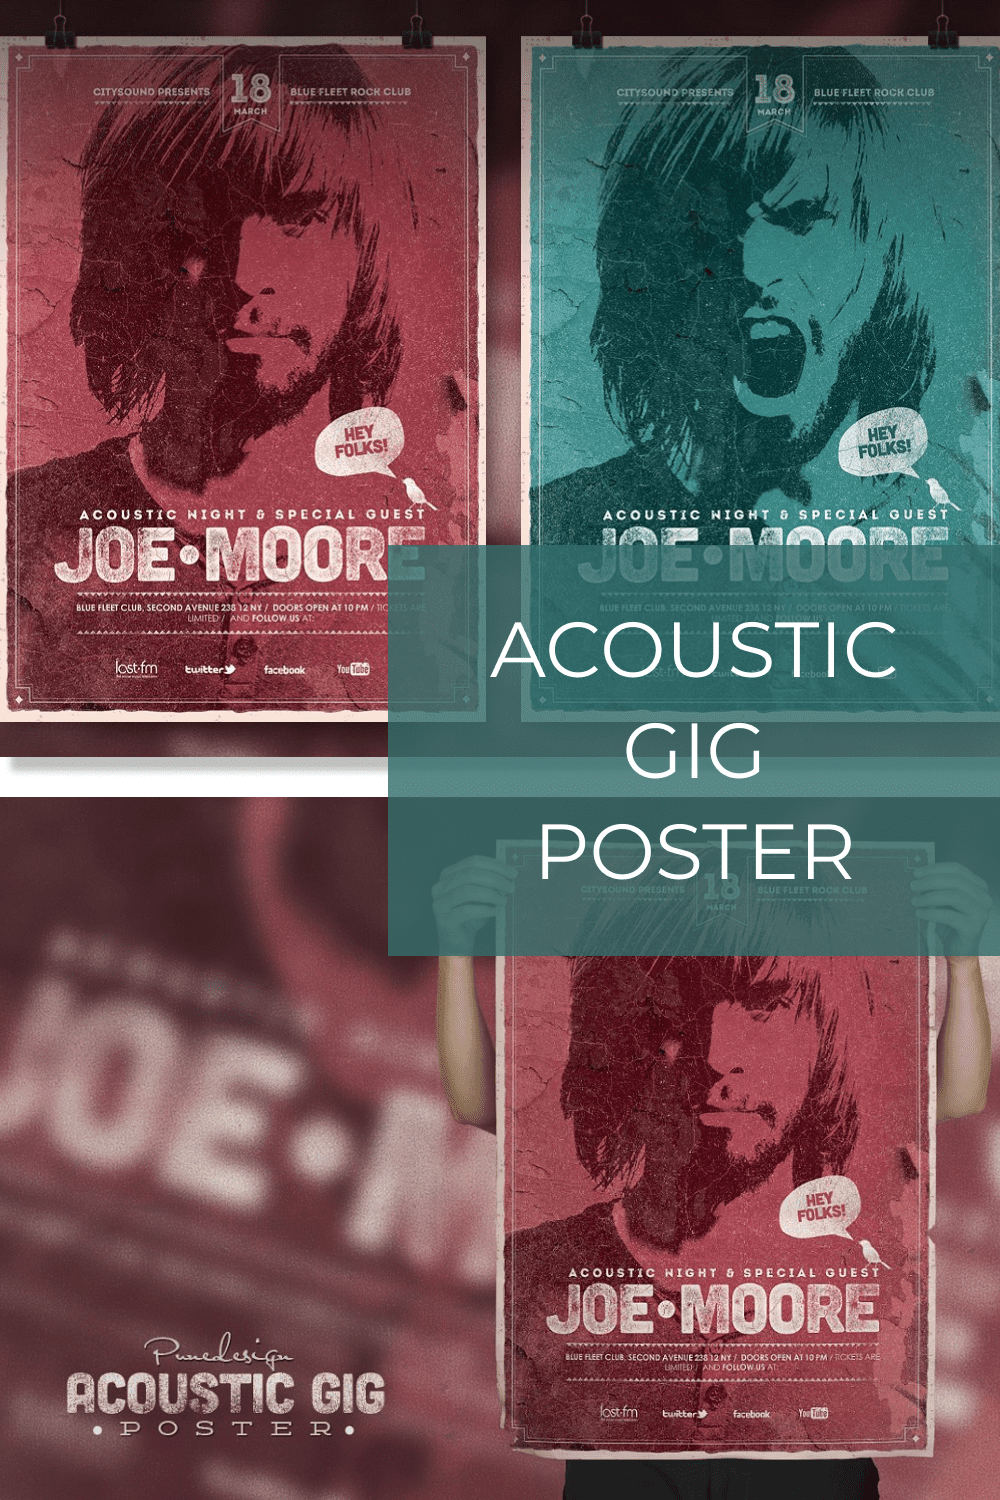 Acoustic GIG Poster pinterest image.